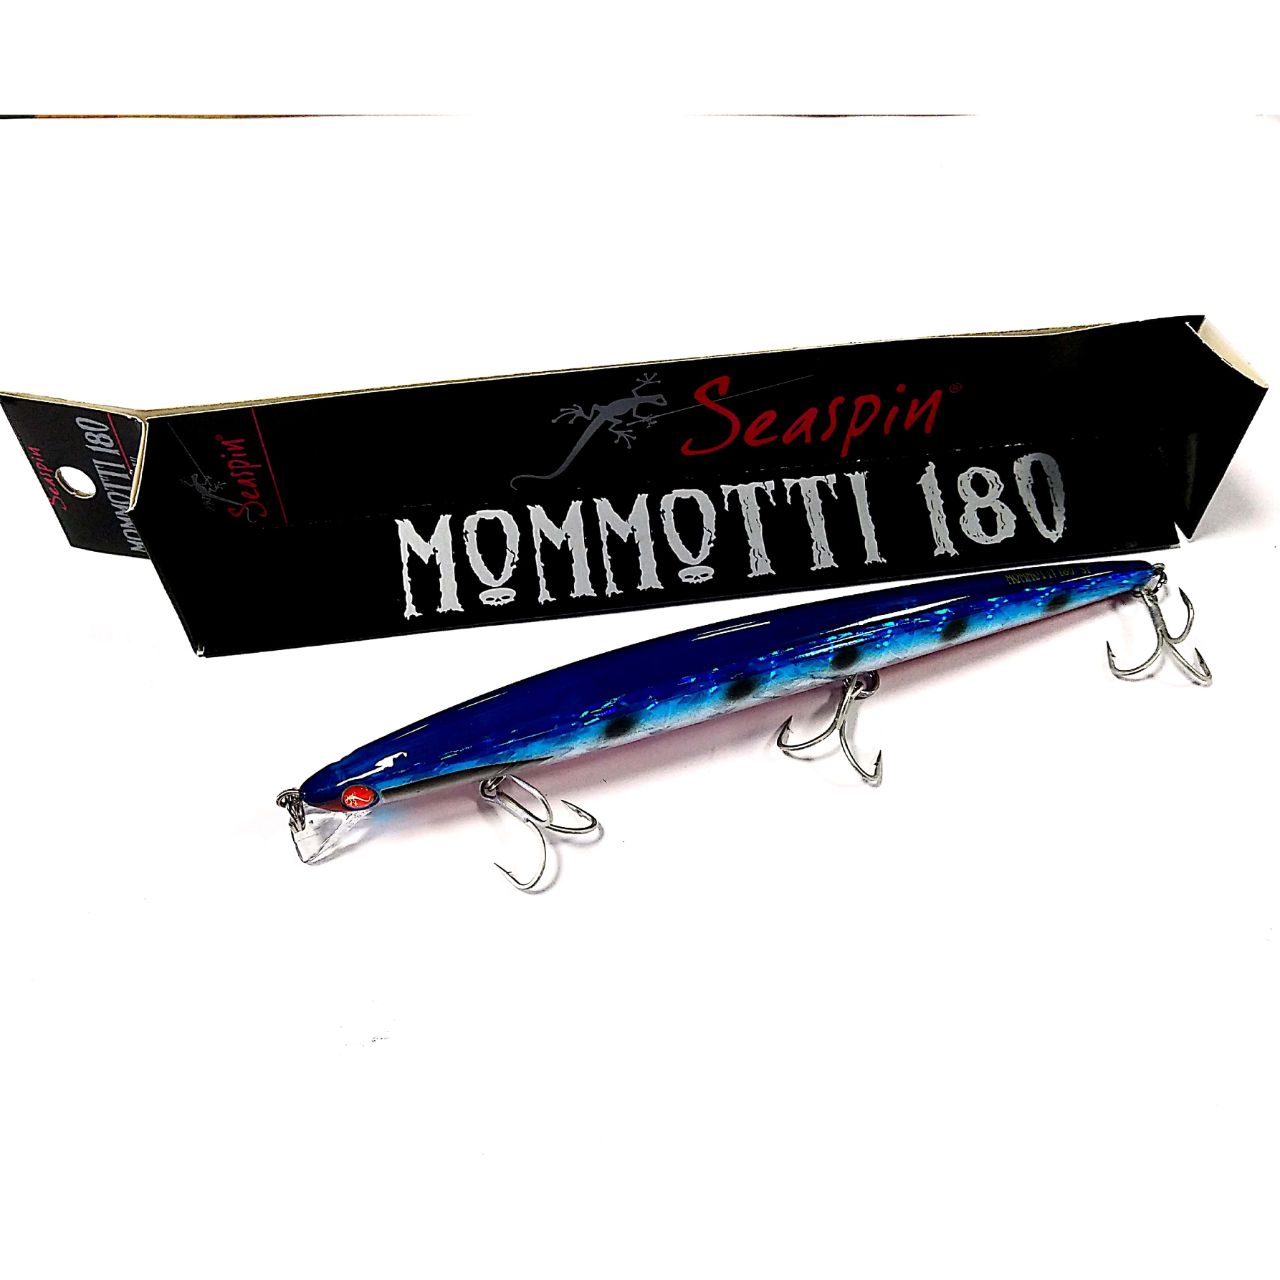 Sea Spin Mommotti 180 SF 8034076100441.jpg